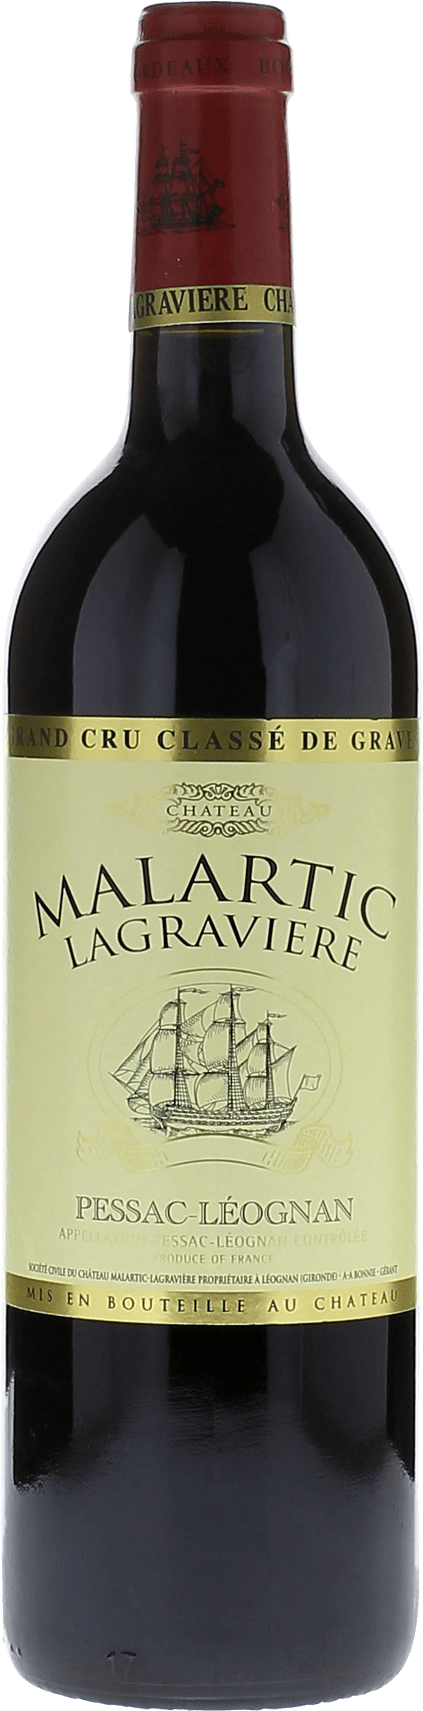 Malartic lagraviere rouge 1987 Grand Cru Class Graves, Bordeaux rouge